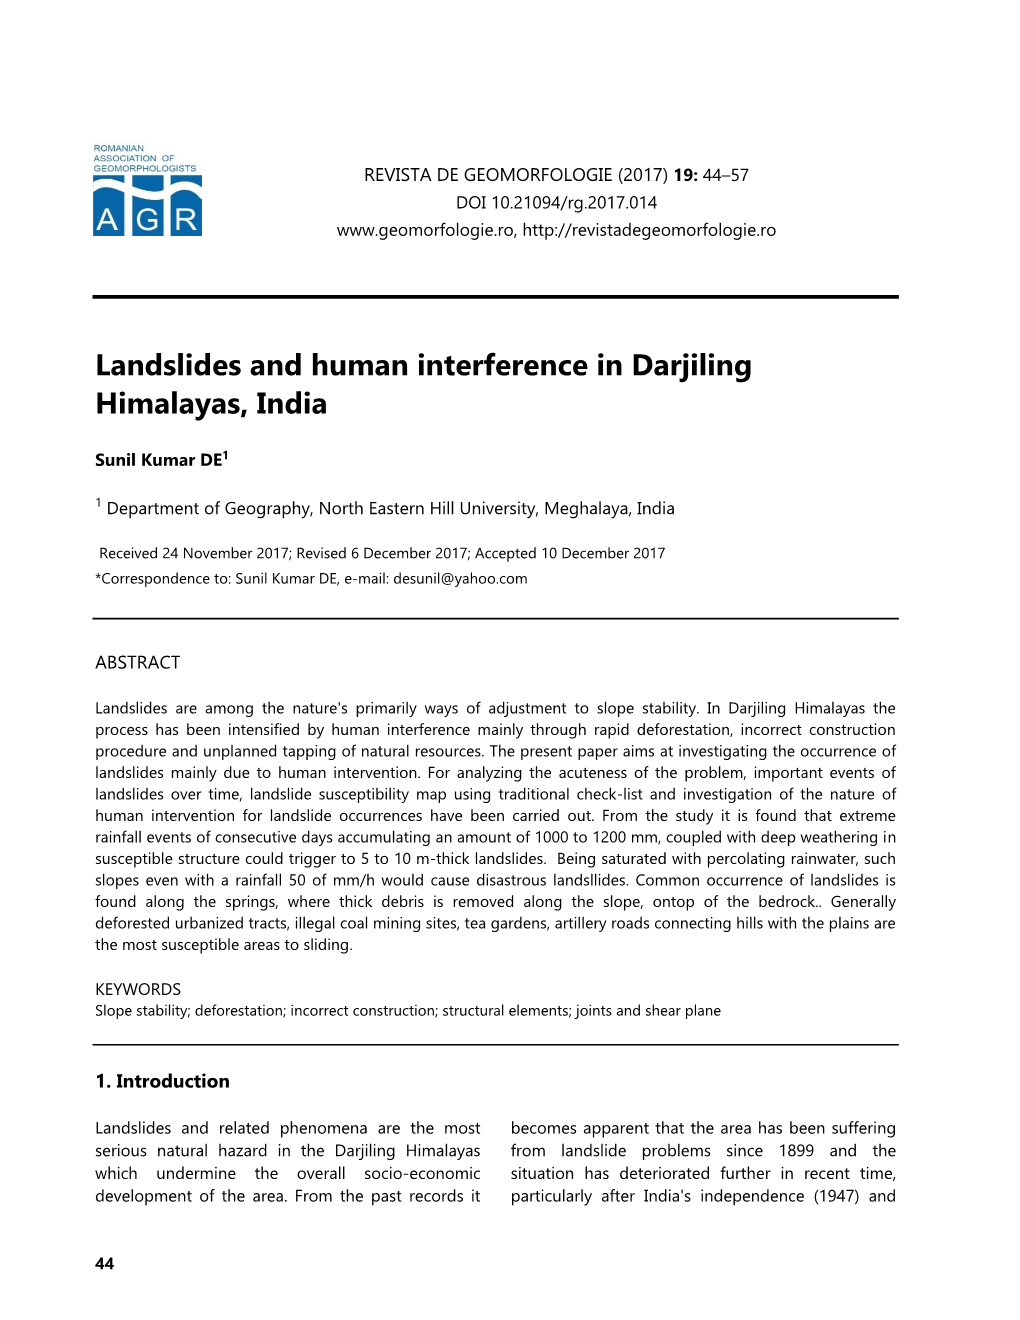 Landslides and Human Interference in Darjiling Himalayas, India